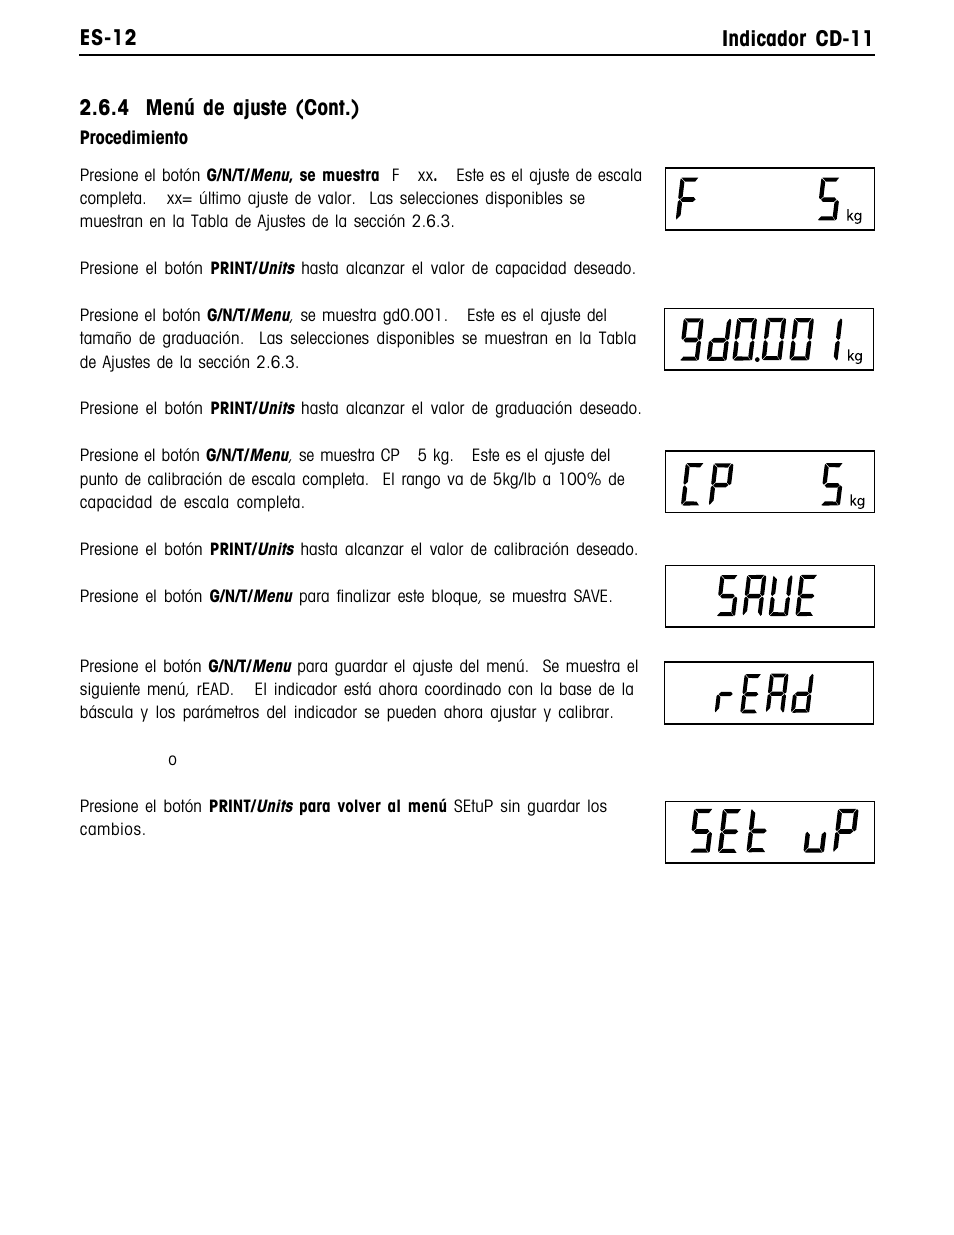 Es-12 indicador cd-11, 4 menú de ajuste (cont.) | Ohaus CD-11 Indicator  Manual multi User Manual | Page 56 / 120 | Original mode